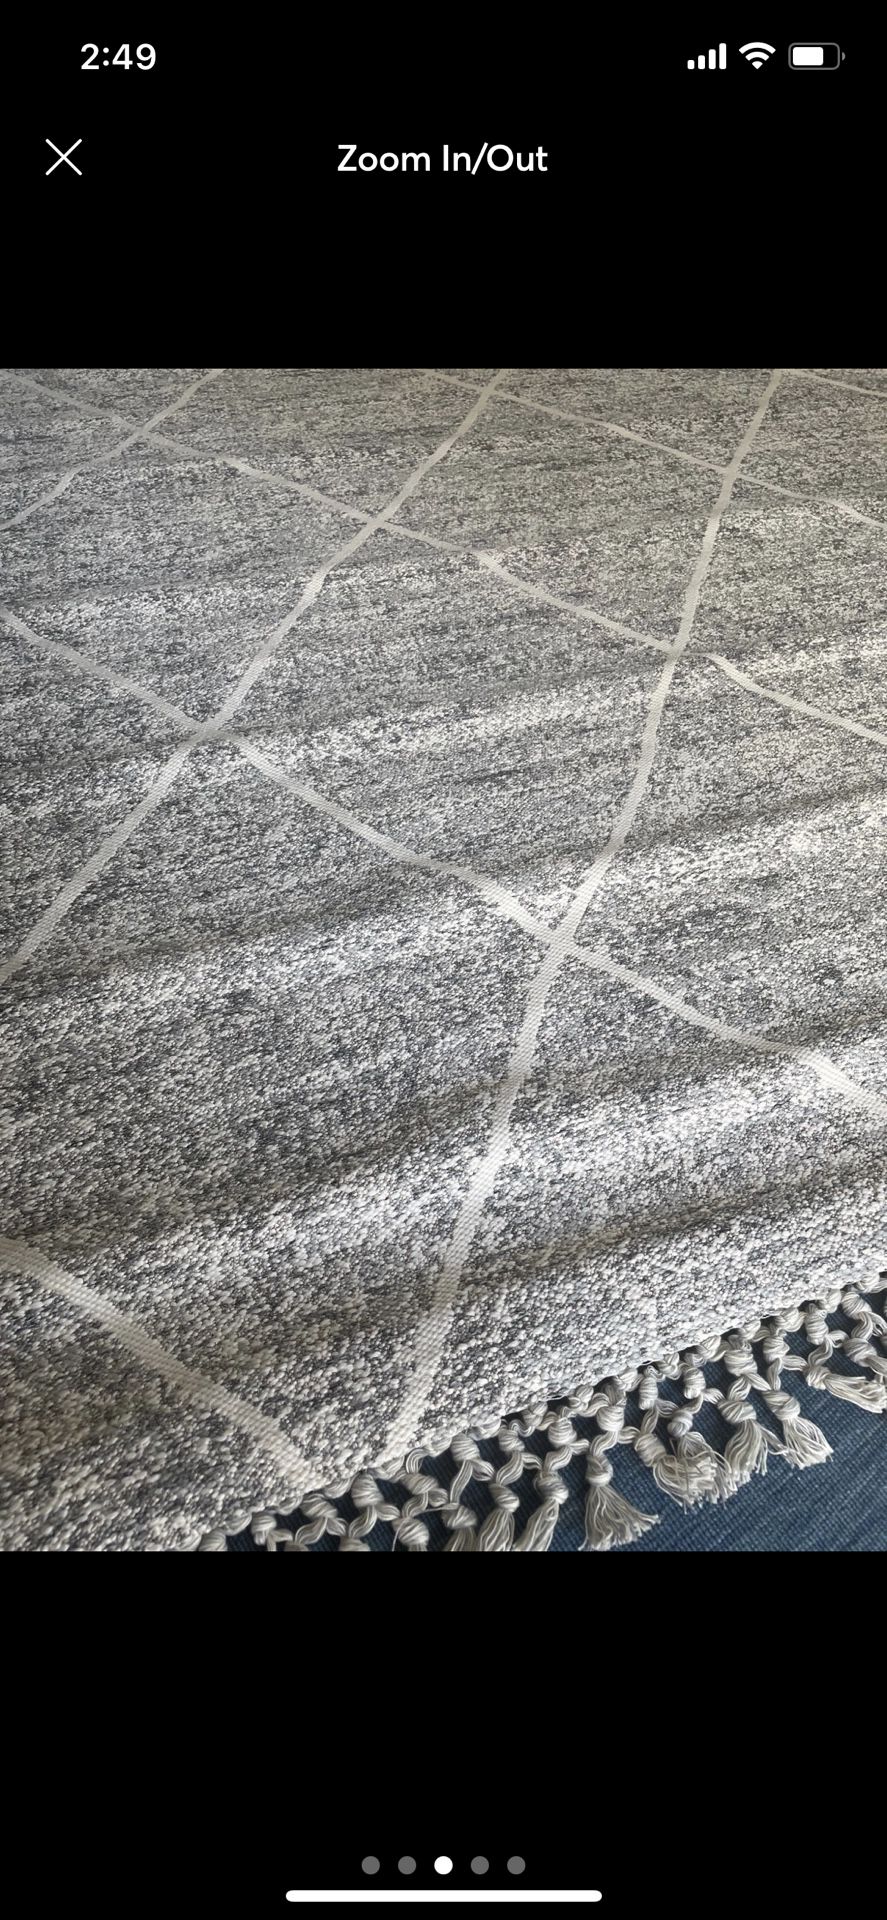 5x7 outdoor silver gray trellis diamond area rug with fringe target brand